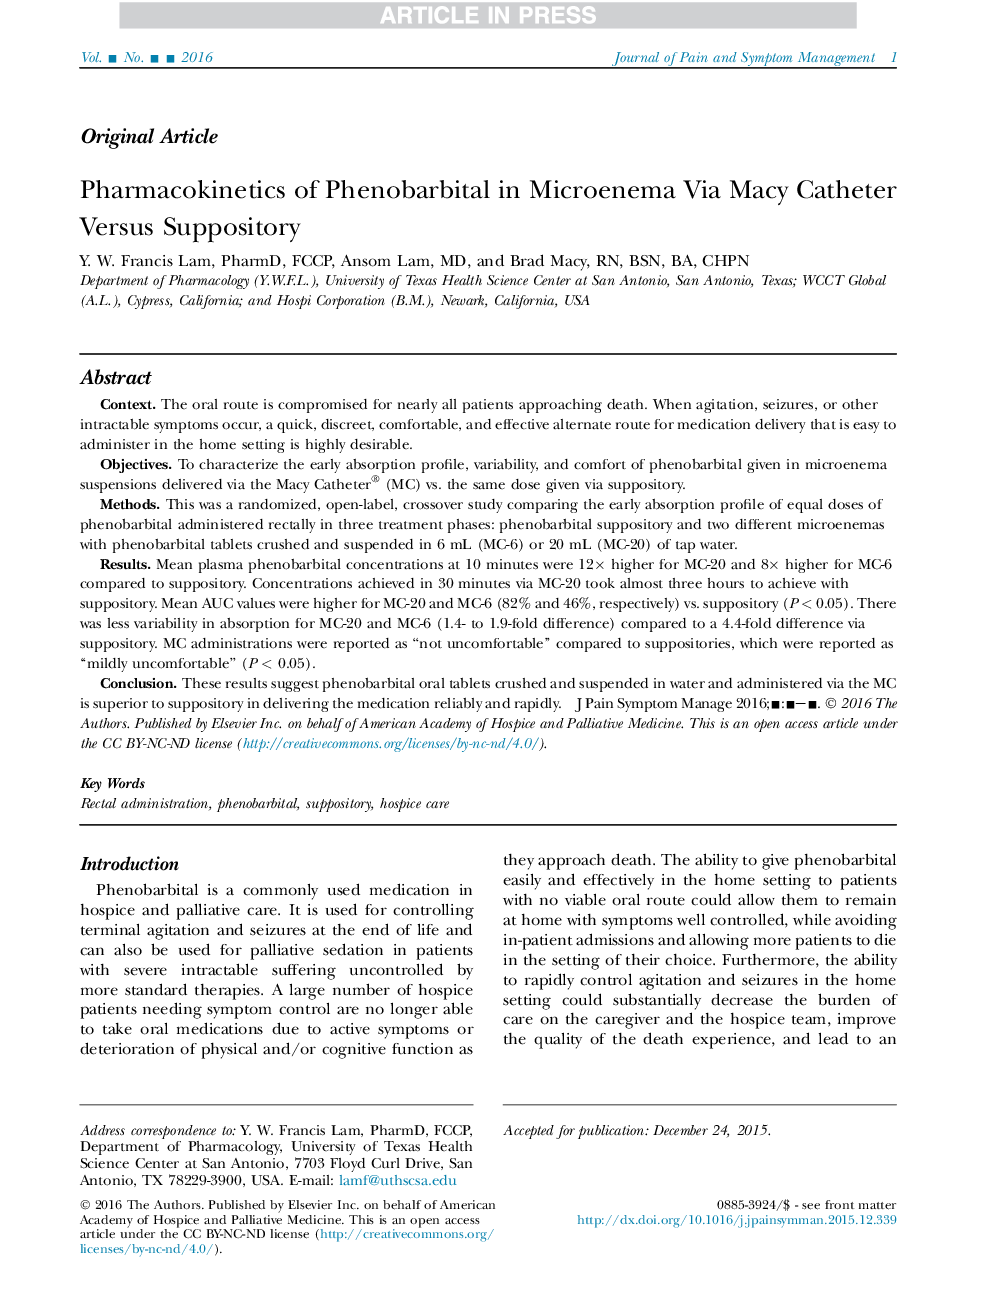 Pharmacokinetics of Phenobarbital in Microenema Via Macy Catheter Versus Suppository